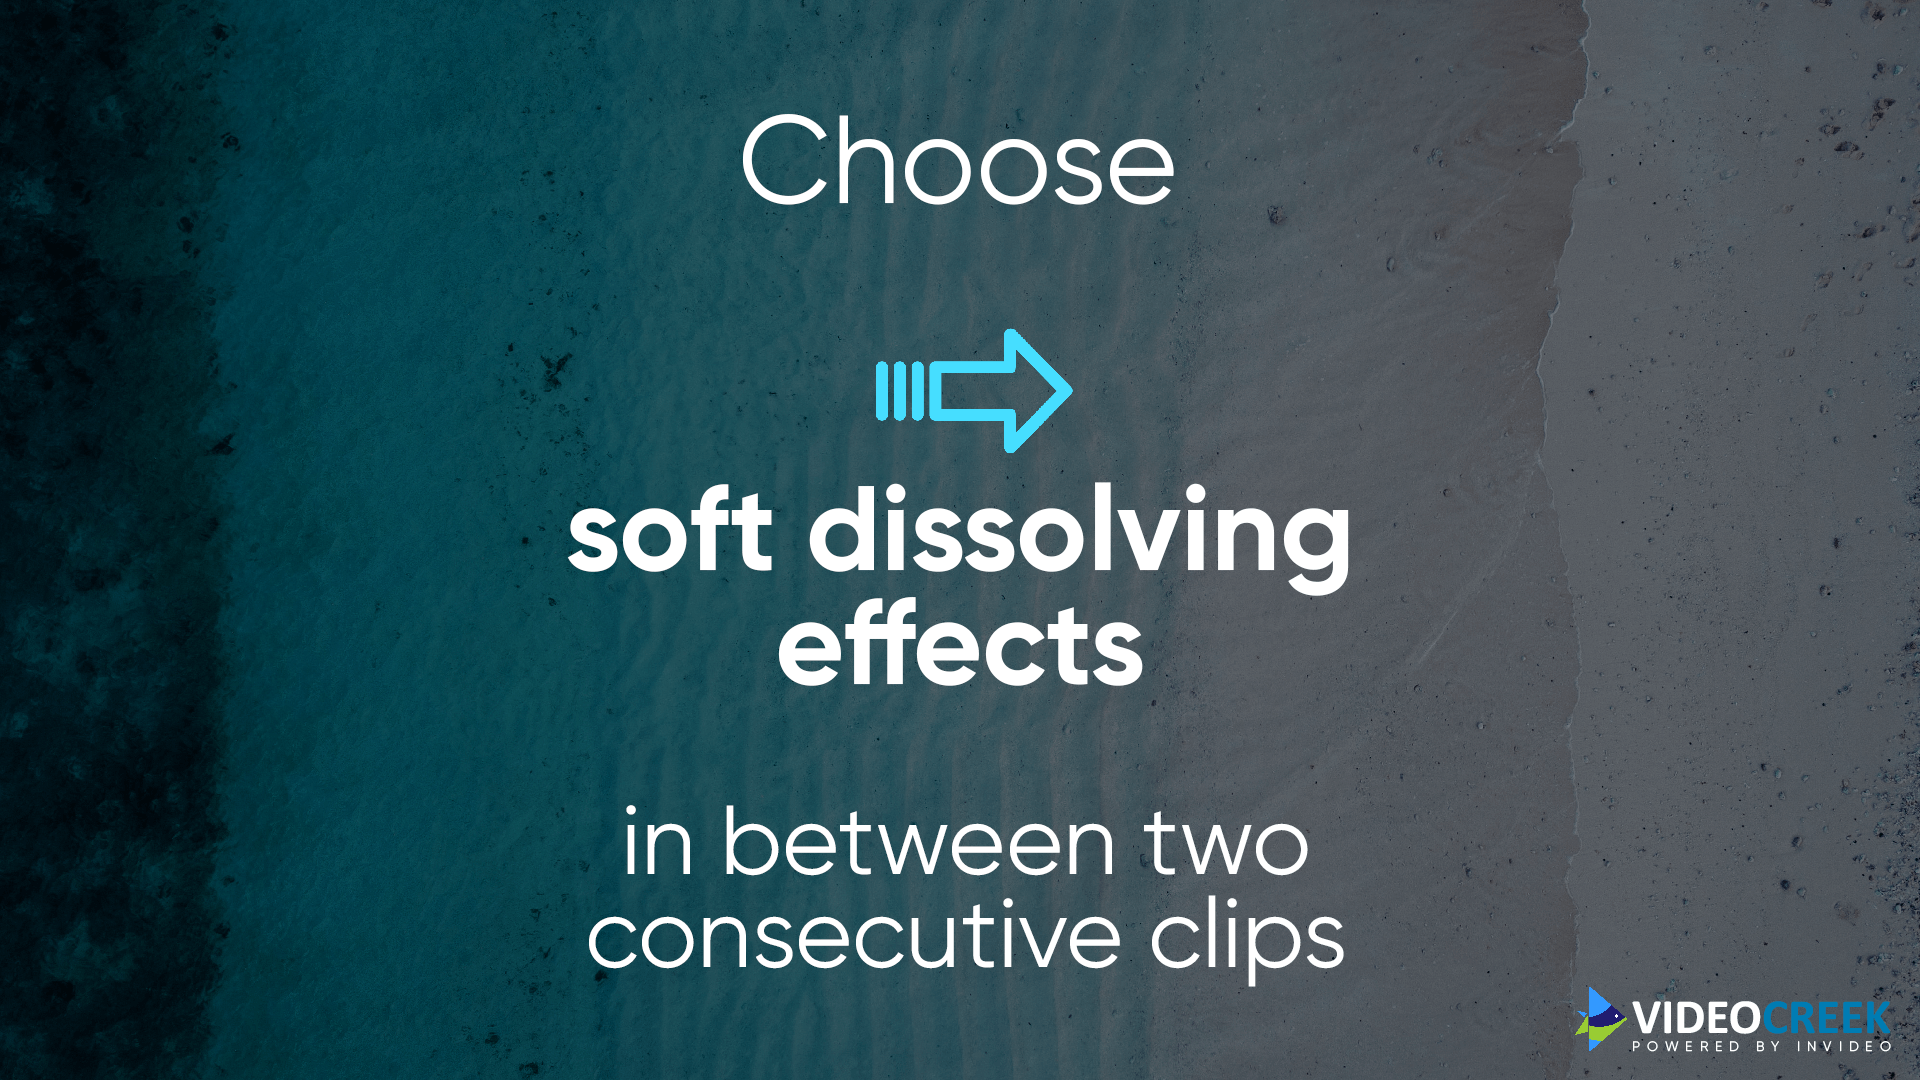 Choose soft dissolving effects